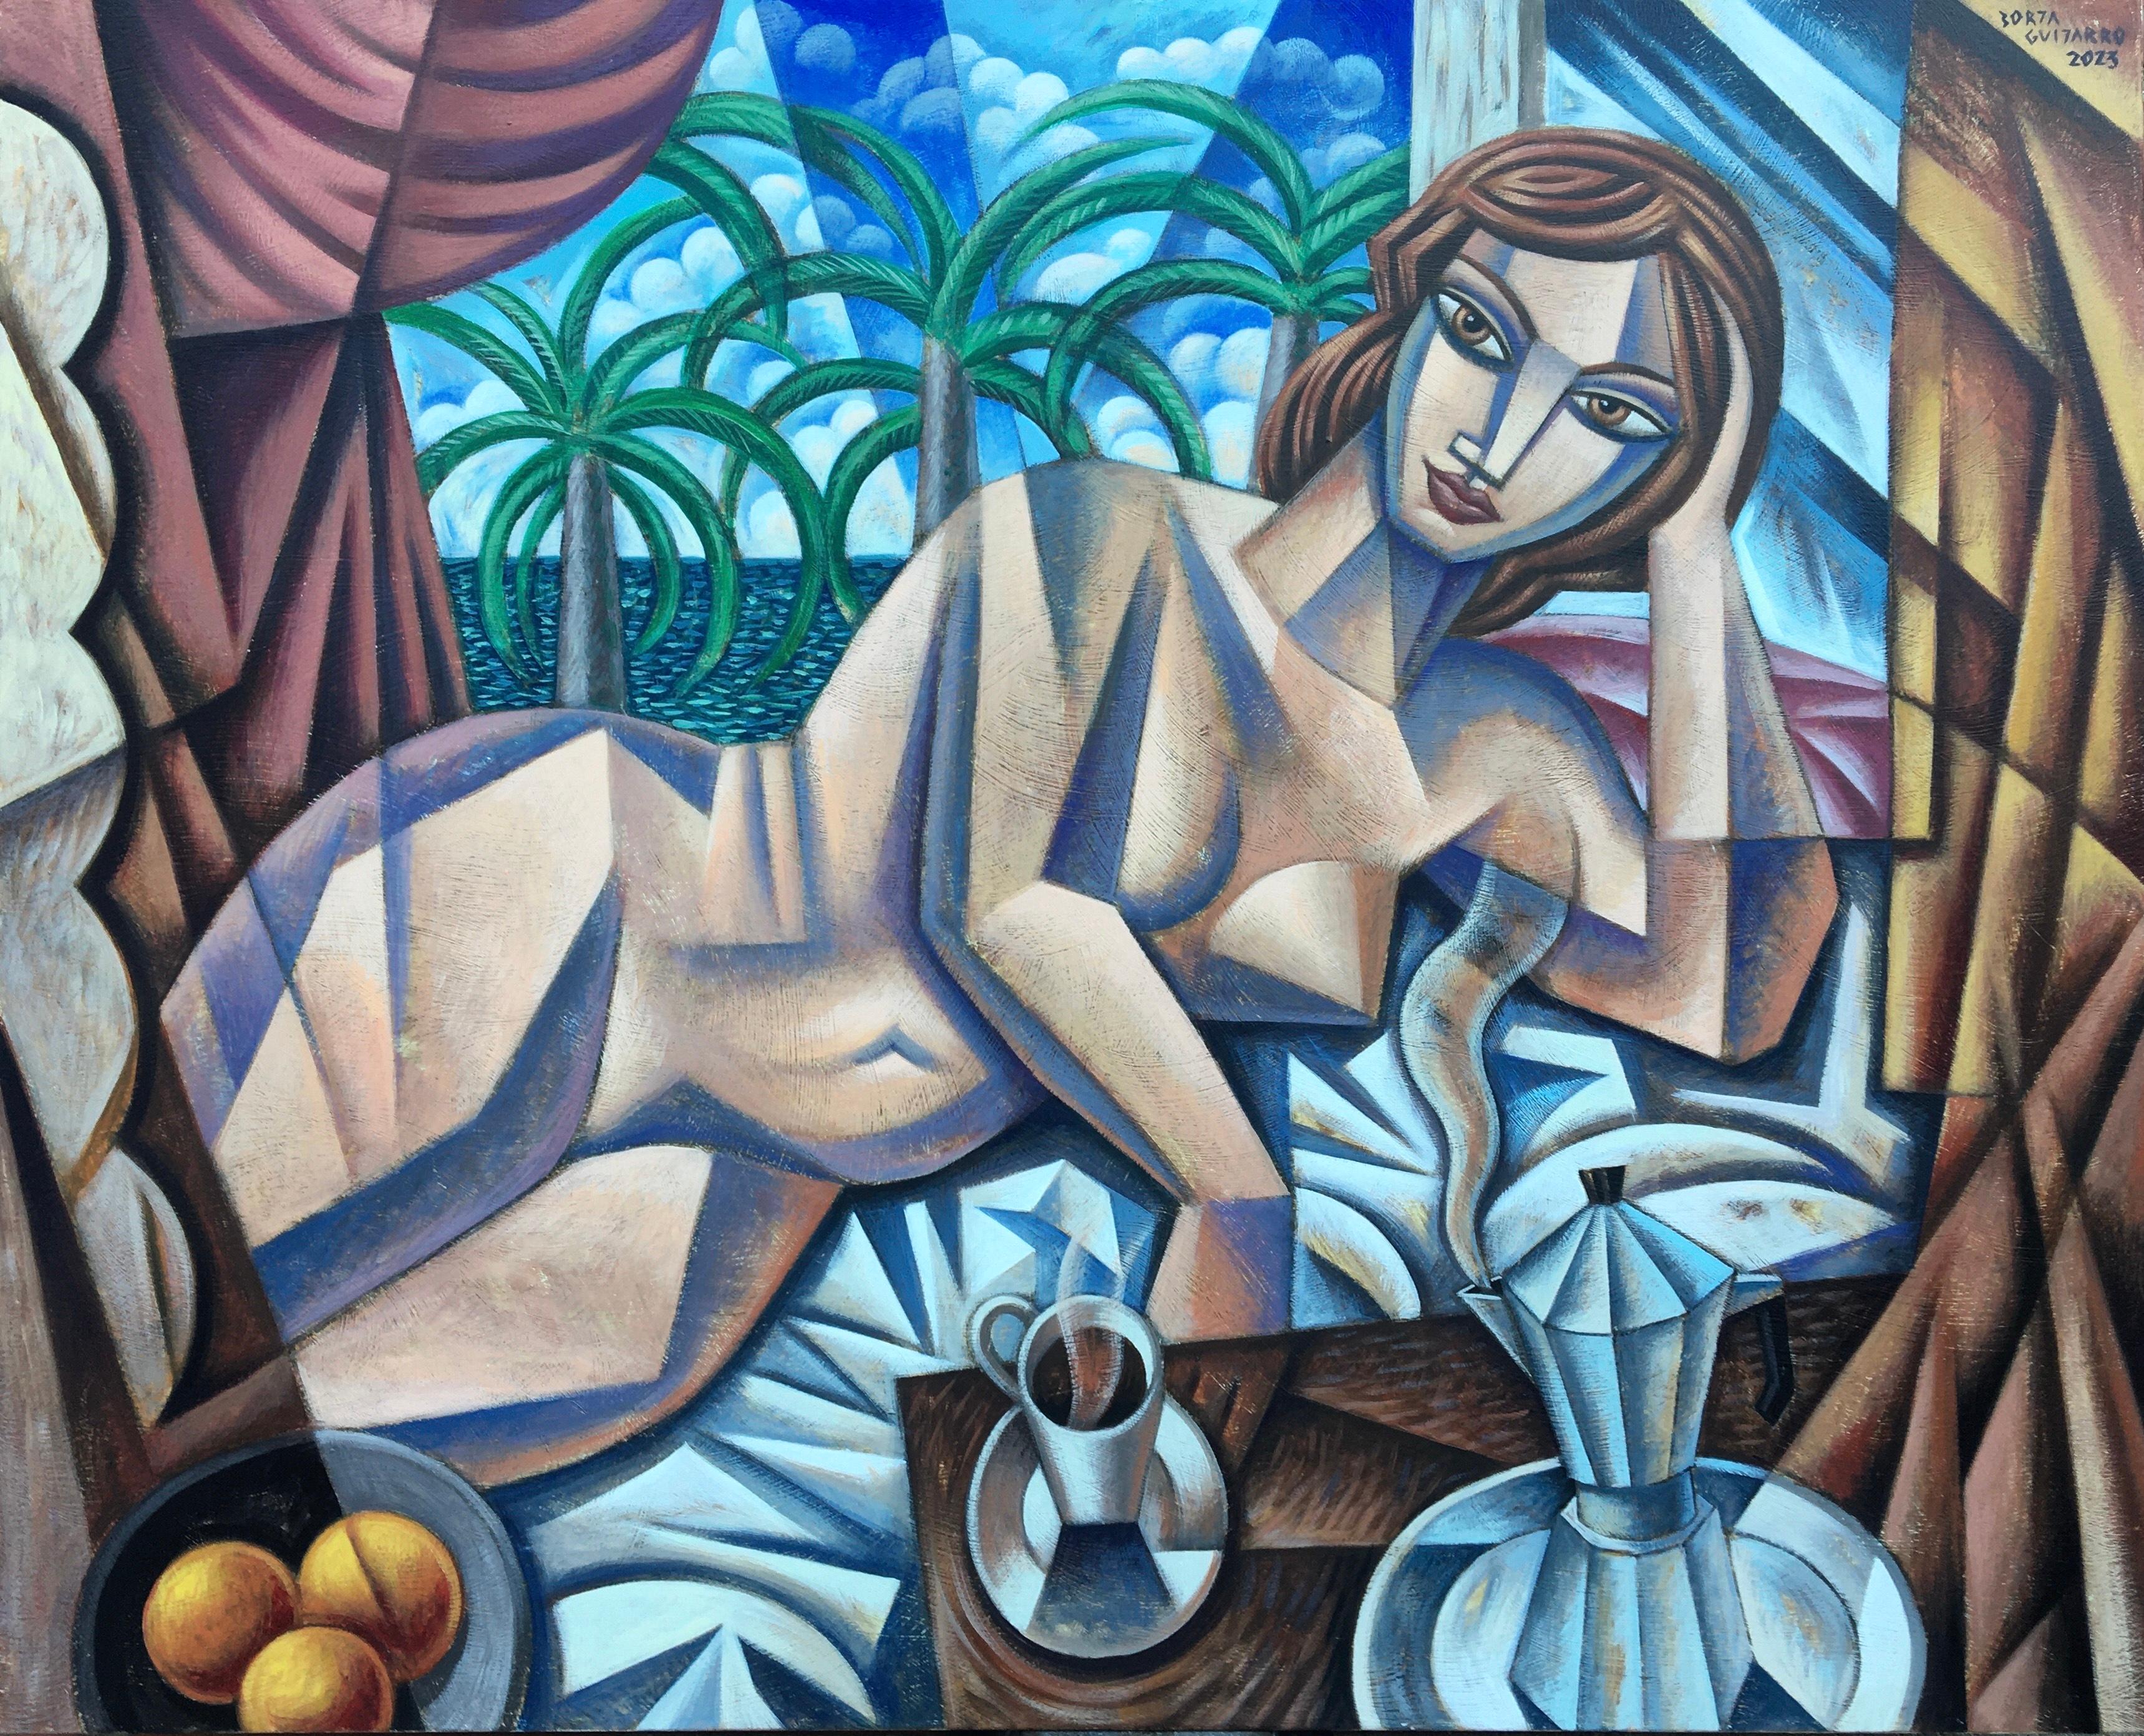 Borja Guijarro Figurative Painting - Mujer con Café - cubism art abstract figurative spanish portrature female form